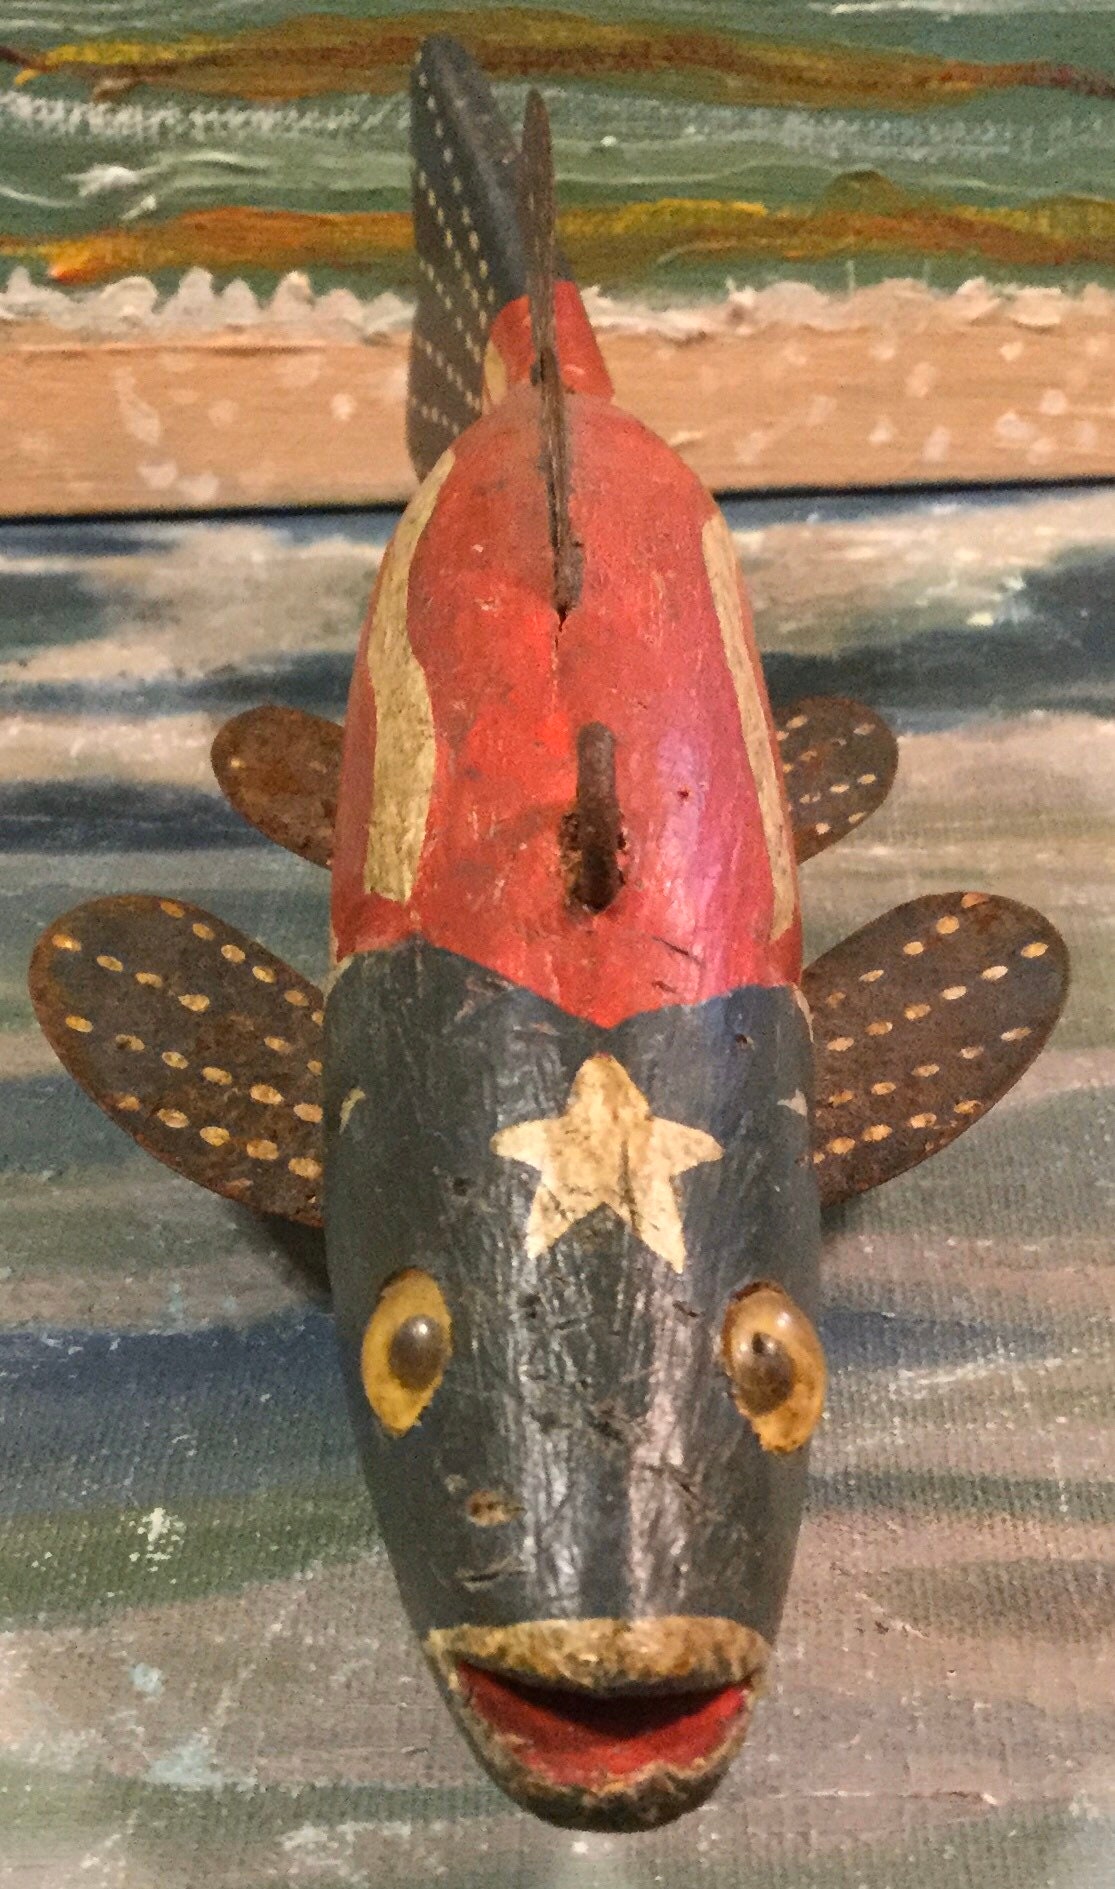 Vintage Fish Decoy/wood Fishing Lure/ice Spearing/usa Flag Patriotic Folk  Art/hand-carved/america July 4th/minnesota/weighted/handmade SET 